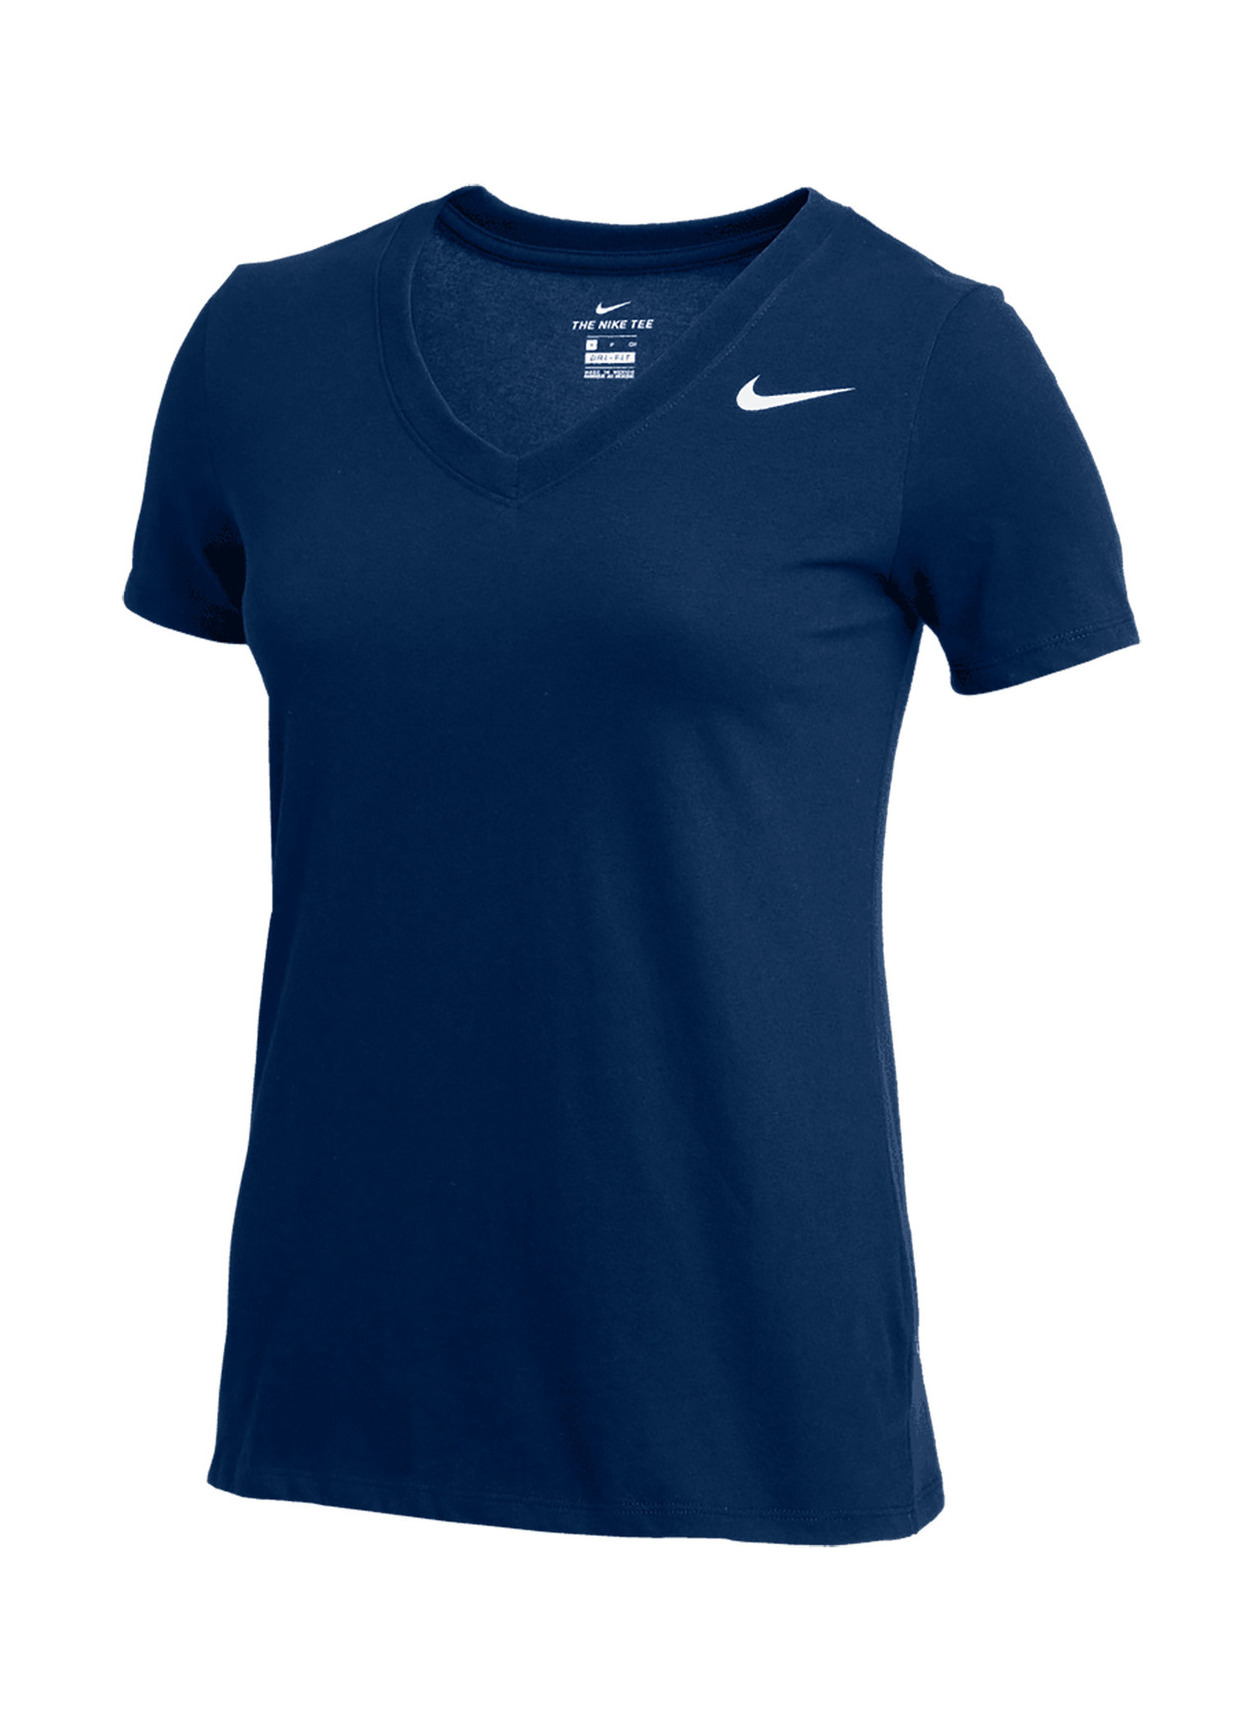 NIKE Women's Df Indy V-Neck Bra T-Shirt, Diffused Blue/Midnight